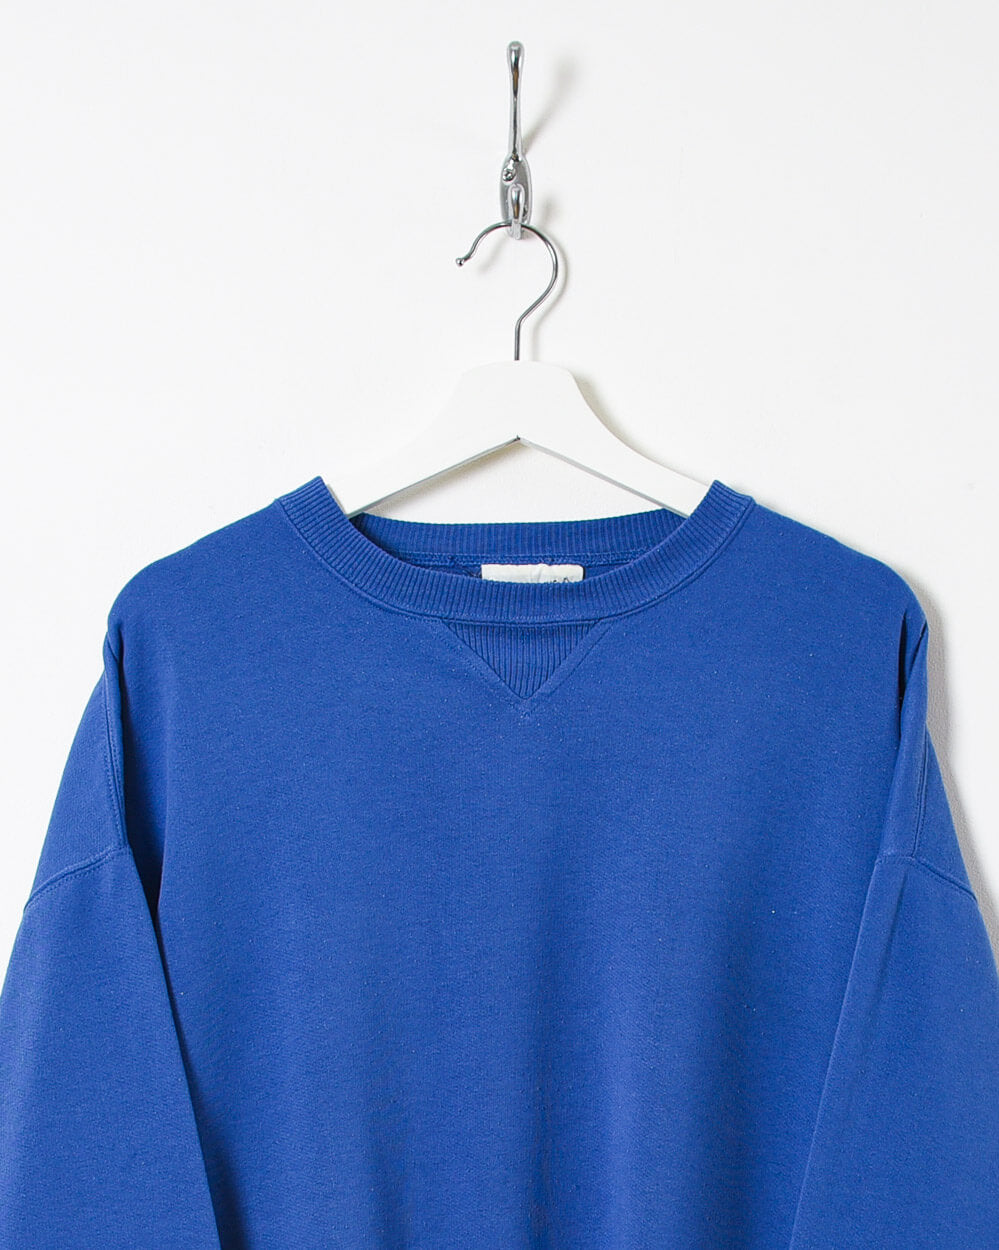 Le Coq Sportif Sweatshirt - Medium - Domno Vintage 90s, 80s, 00s Retro and Vintage Clothing 